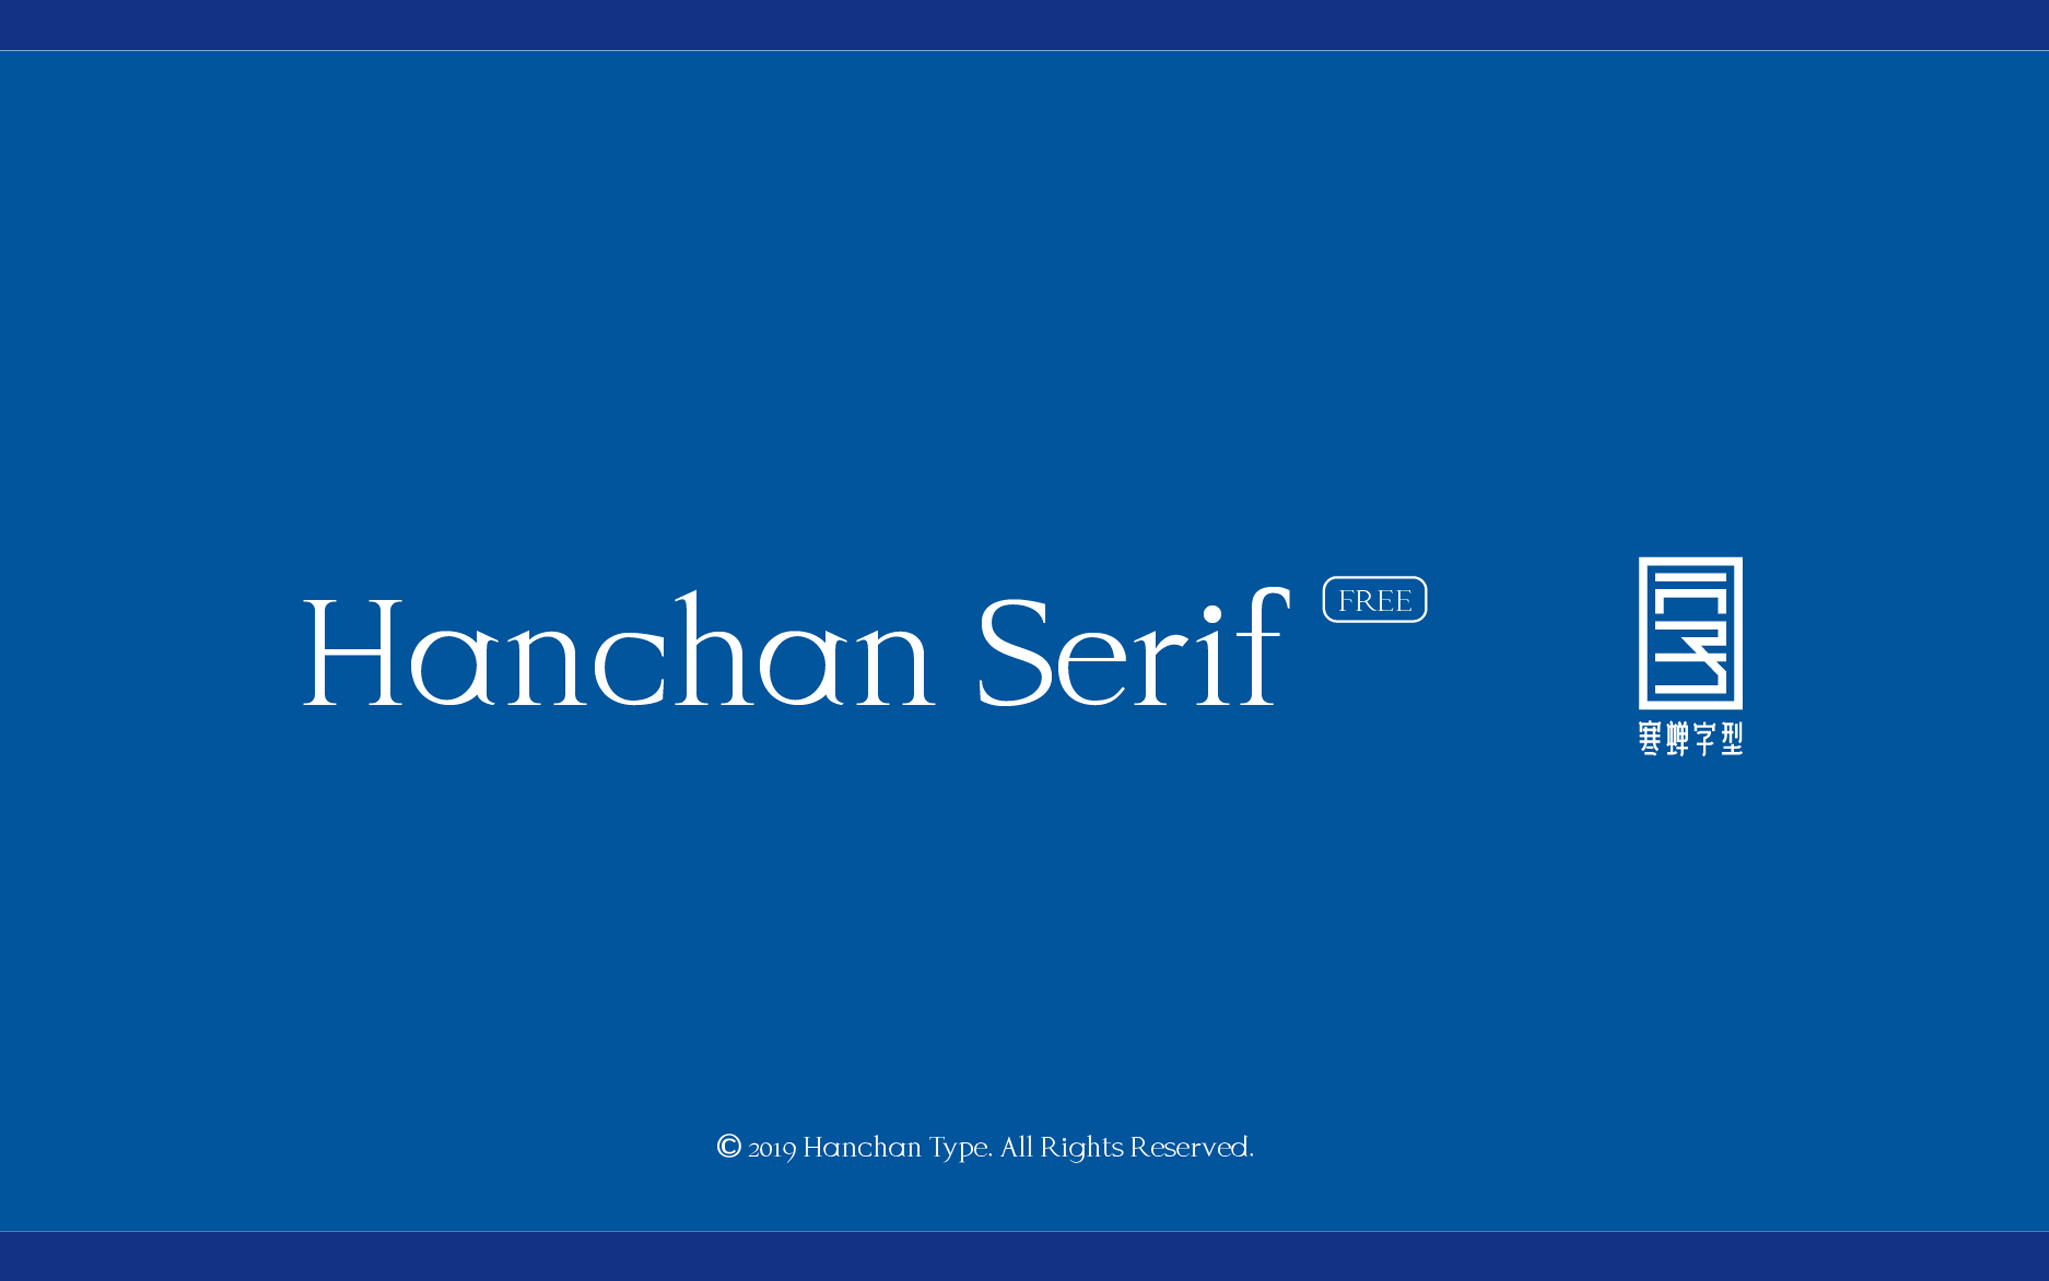 Hanchan Serif 免费商用英文字库下载